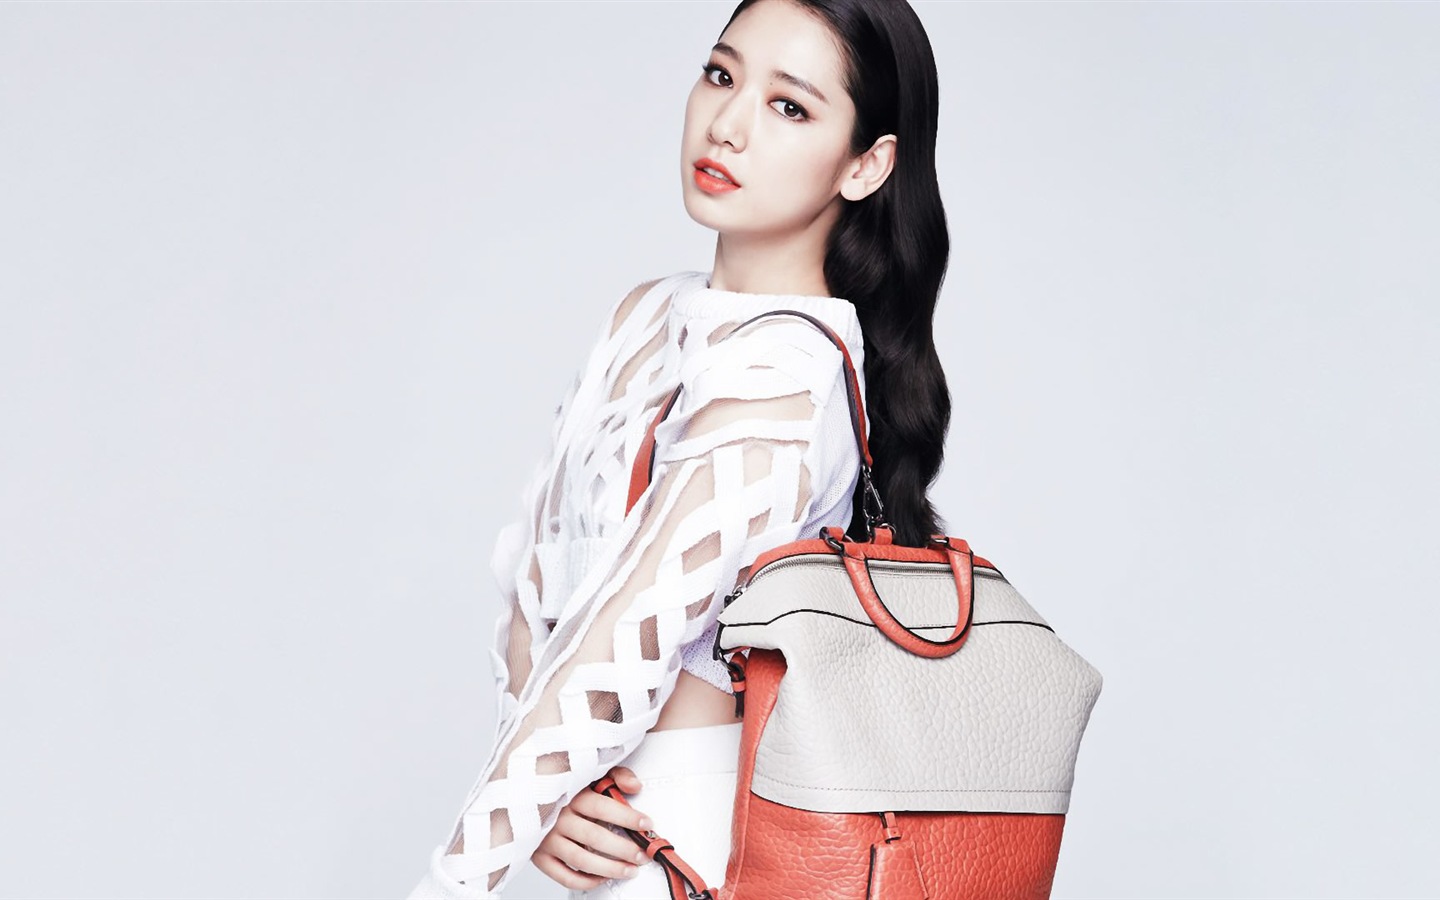 South Korean actress Park Shin Hye HD Wallpapers #3 - 1440x900